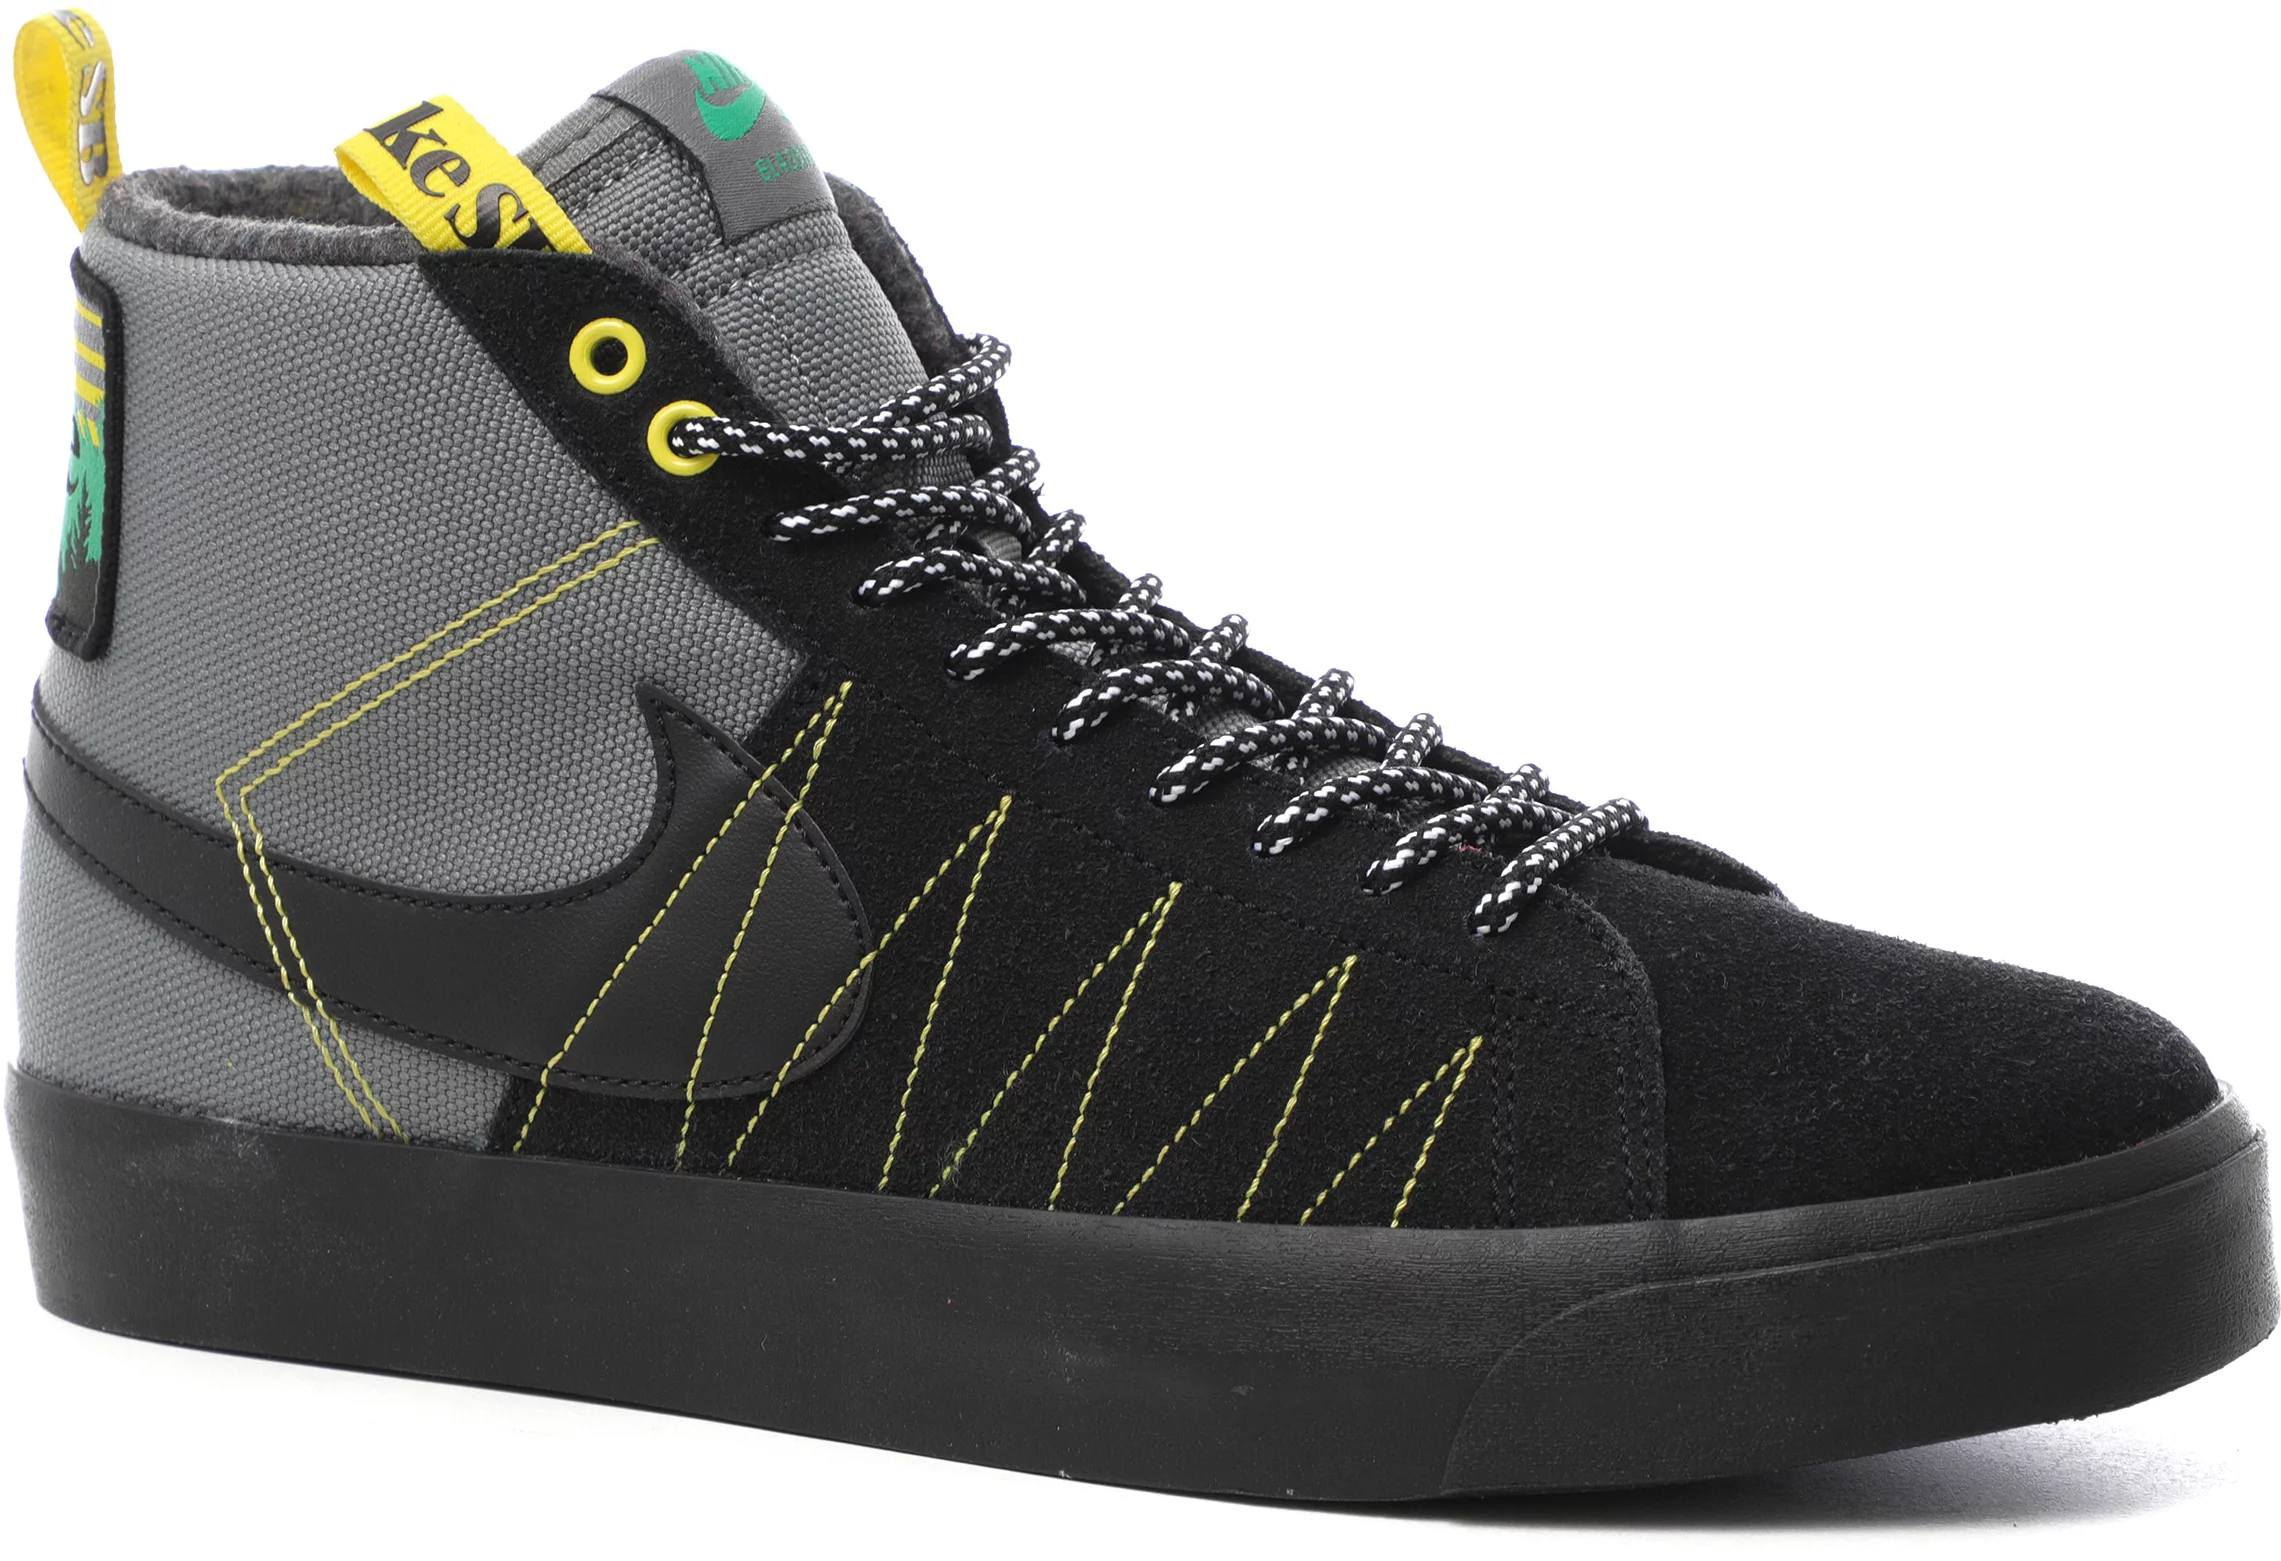 Nike SB Blazer Mid Skateboarding Shoe